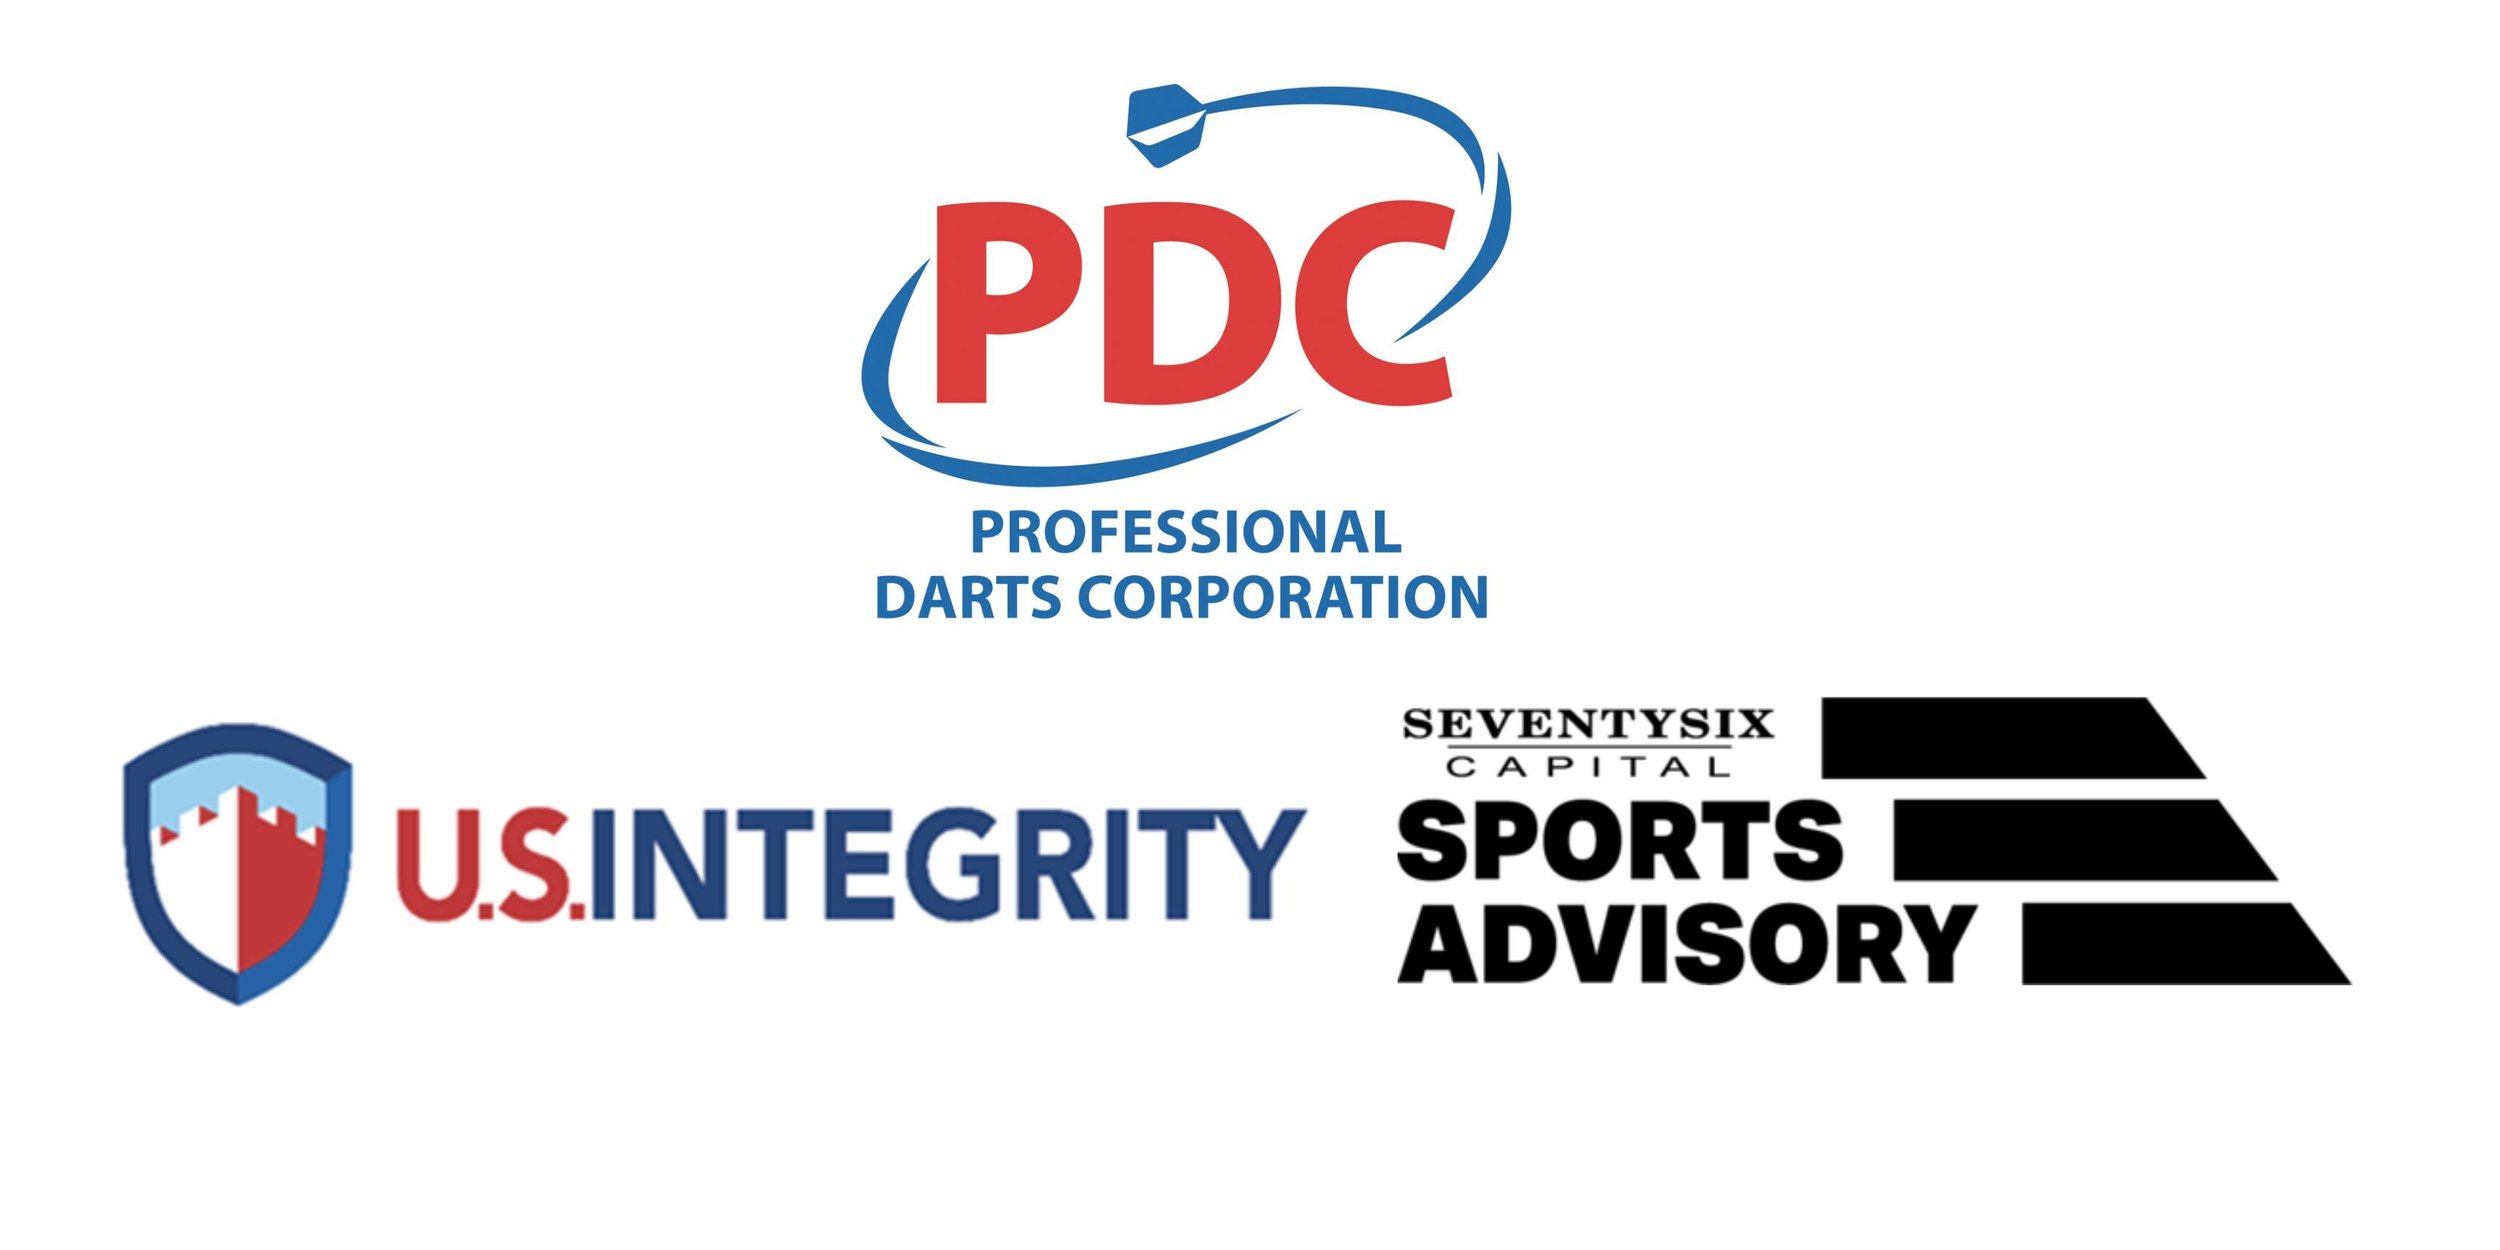 SeventySix and U.S Integrity Announce Partnership with the Professional Darts Corporation U.S. Integrity